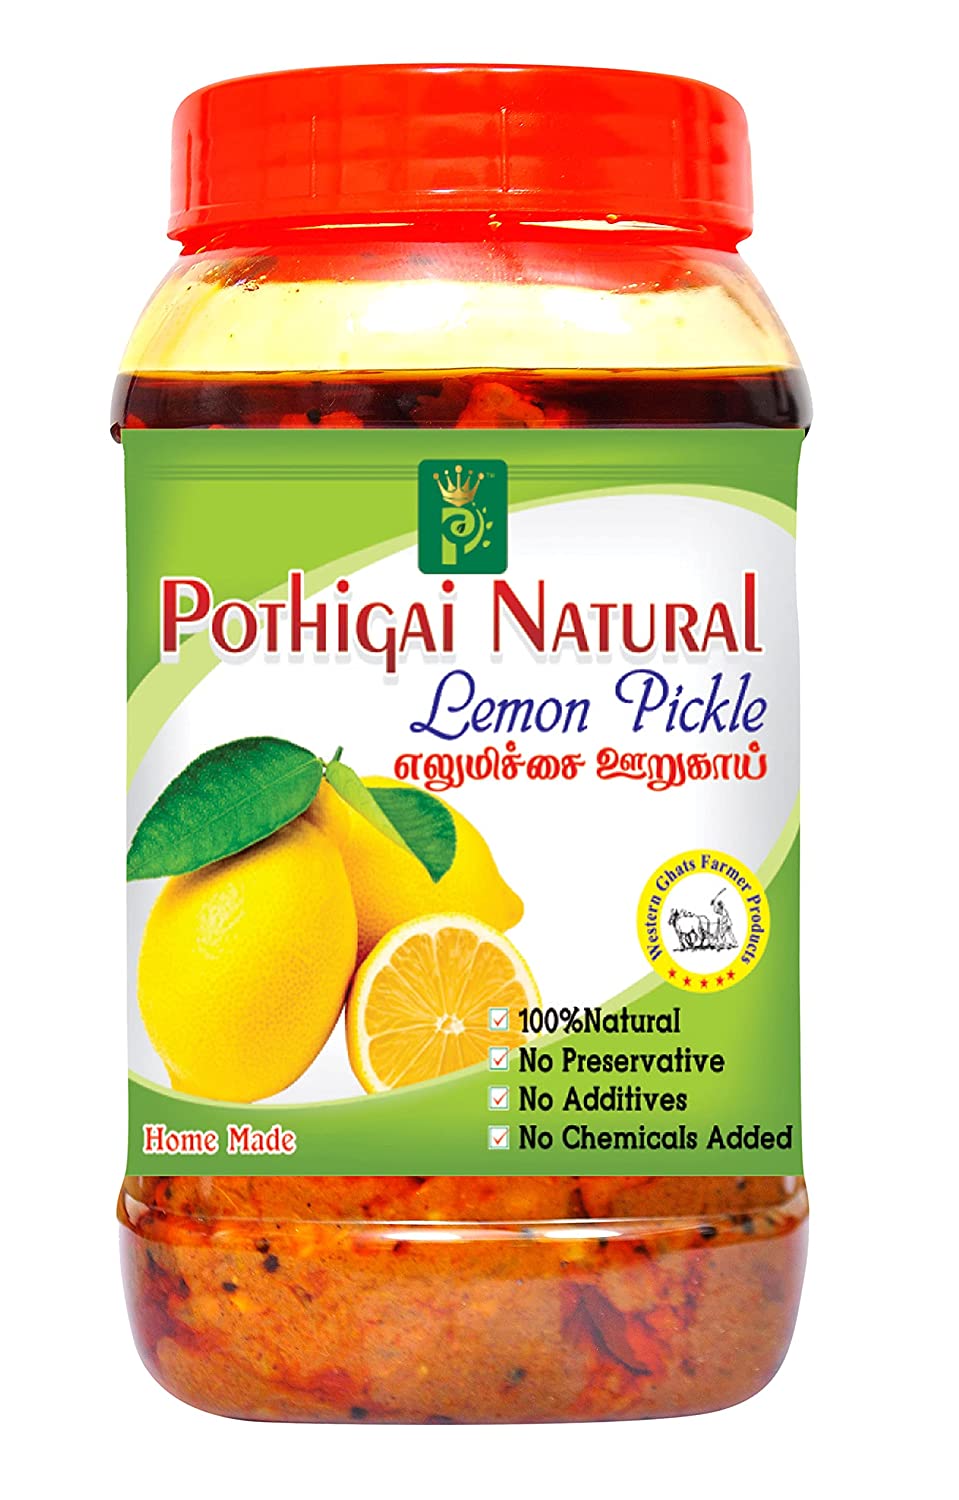 Pothigai Natural Lemon Pickle Image